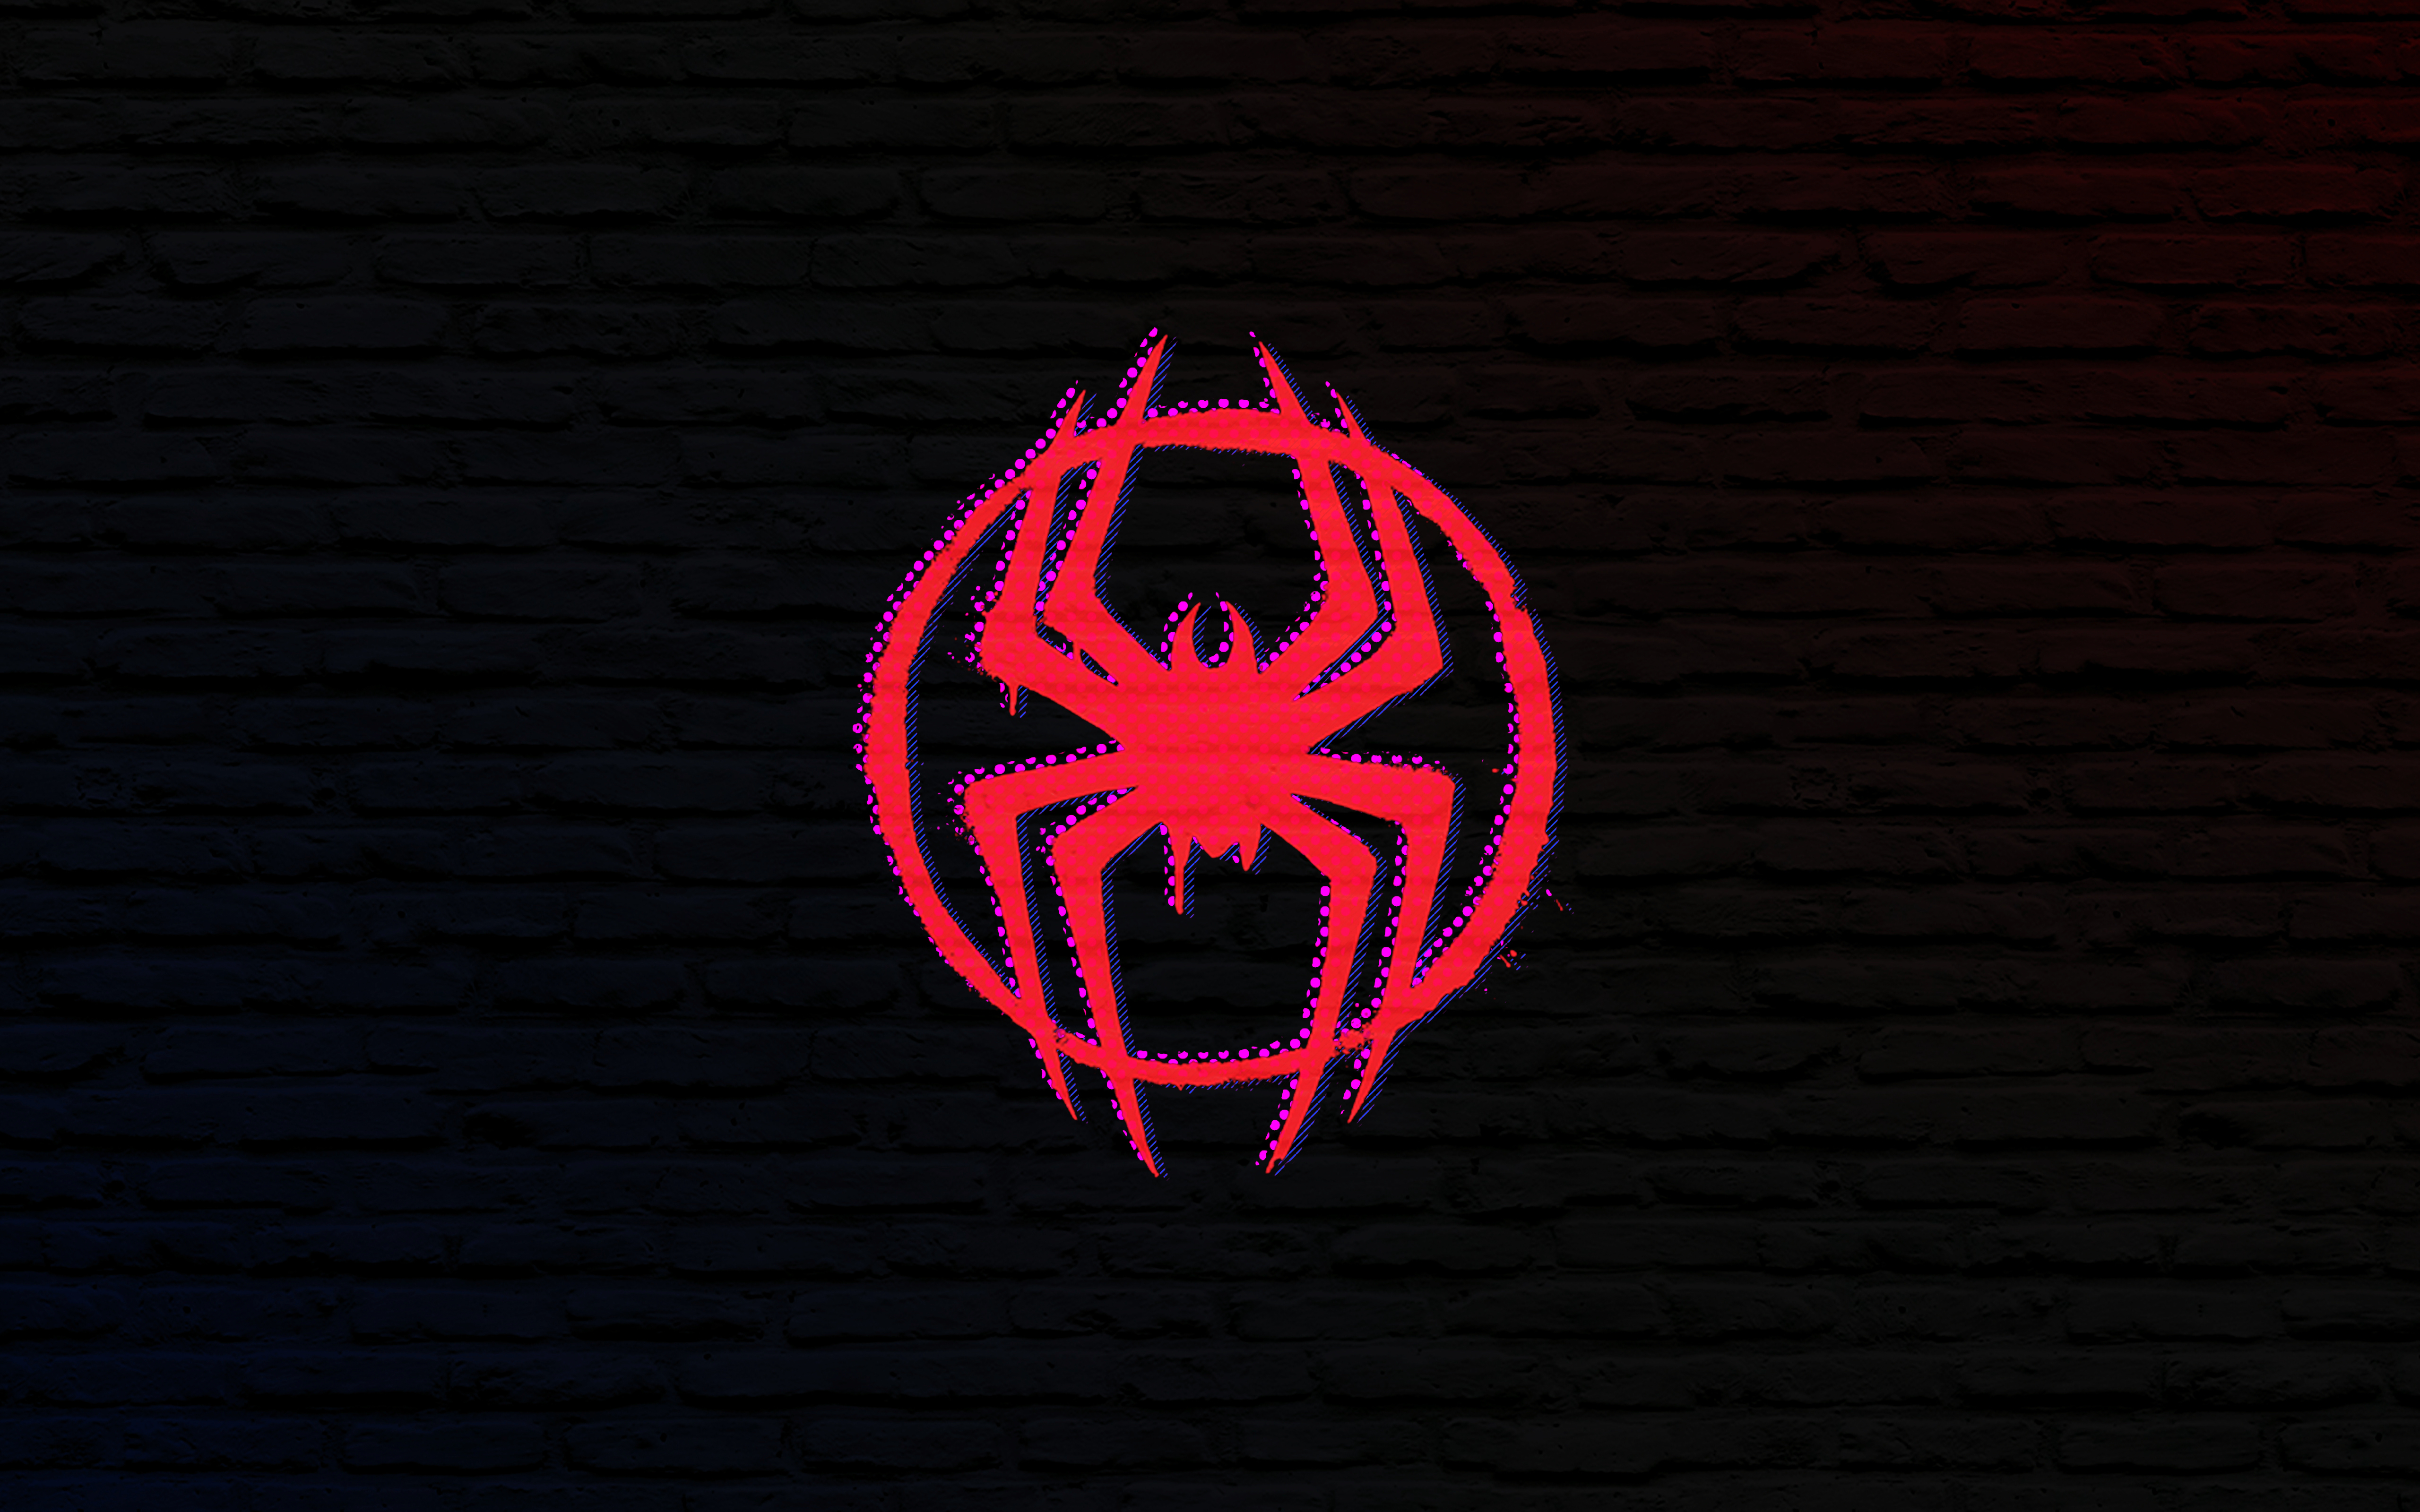 Spider-Man Across the Spider-Verse wallpaper [1400x2800]